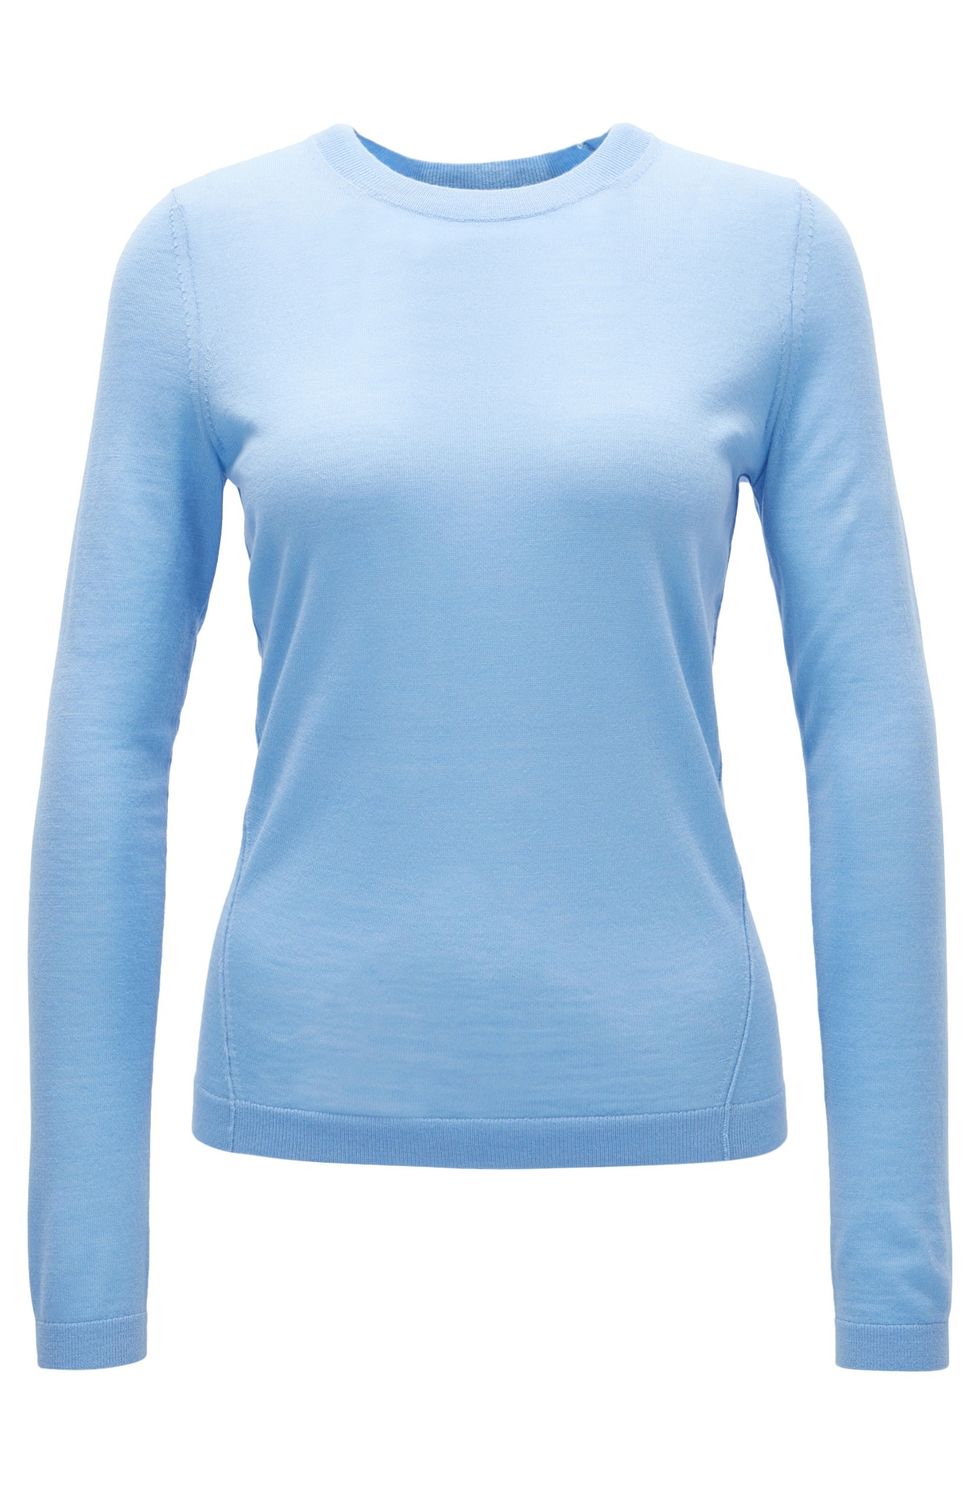 Sleeve, Long-sleeved t-shirt, Clothing, Blue, T-shirt, Neck, Turquoise, Arm, Outerwear, Azure, 